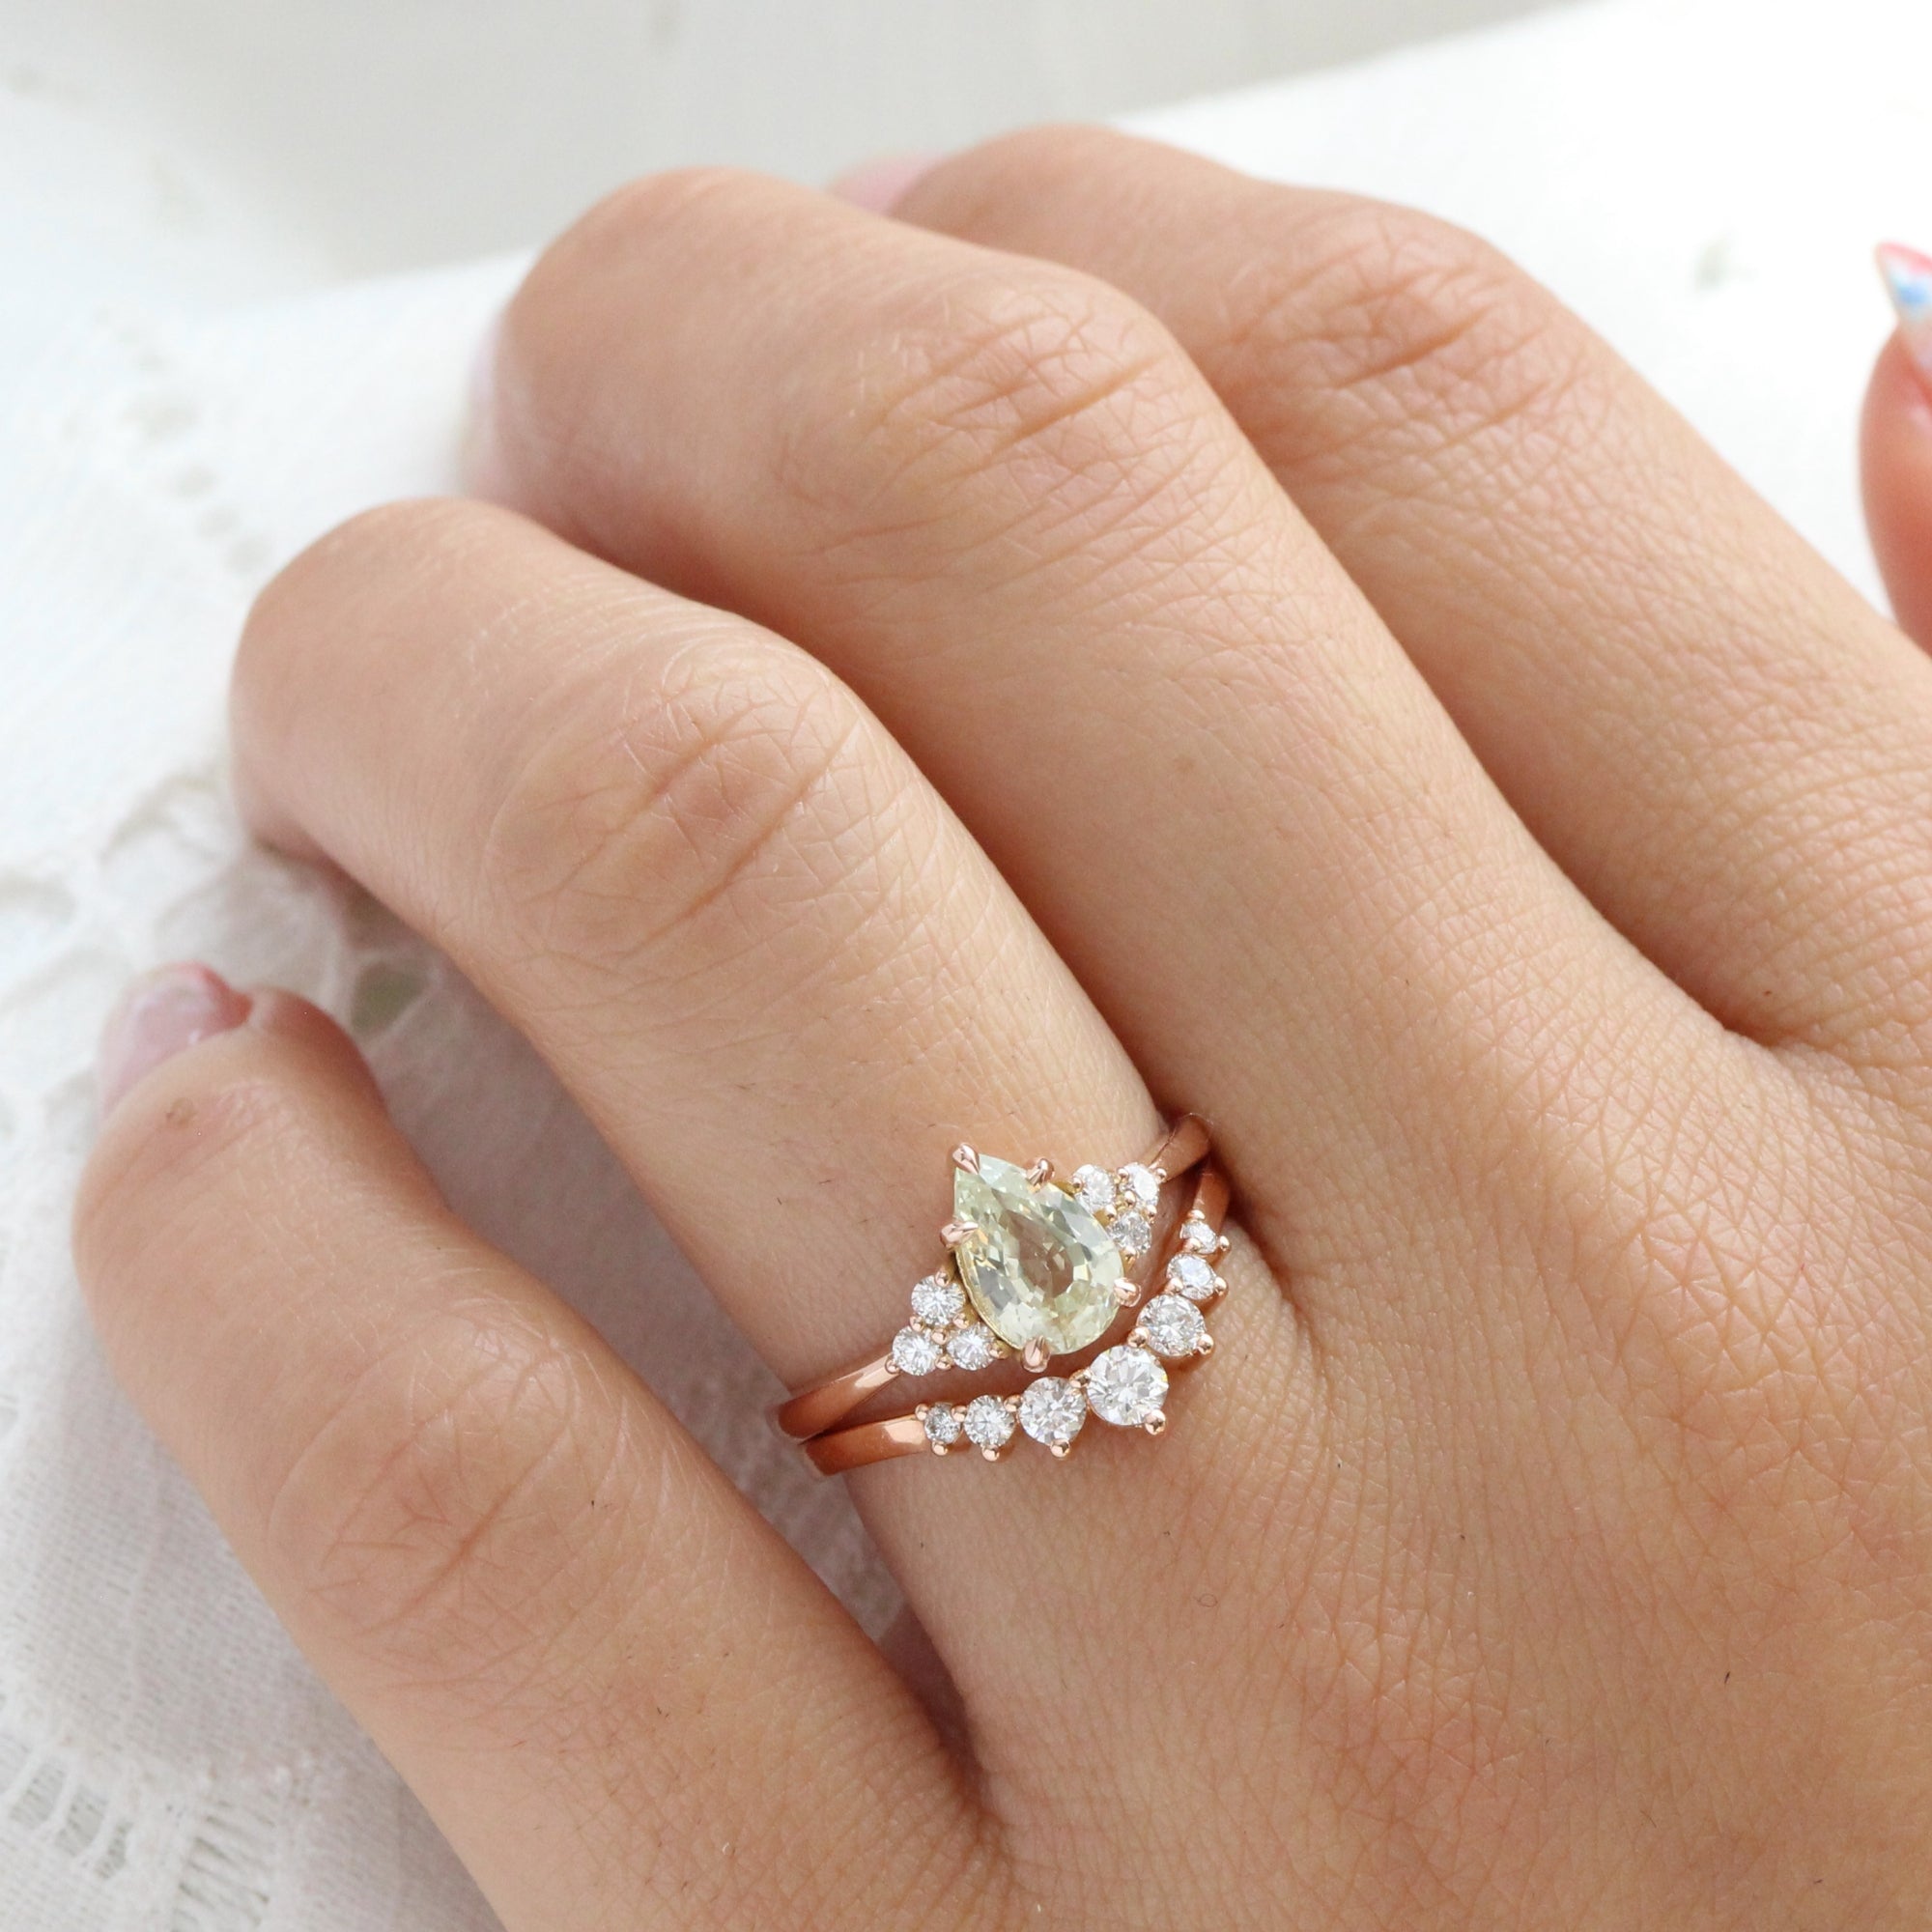 Pear cut sea form green sapphire ring rose gold 3 stone diamond ring la more design jewelry